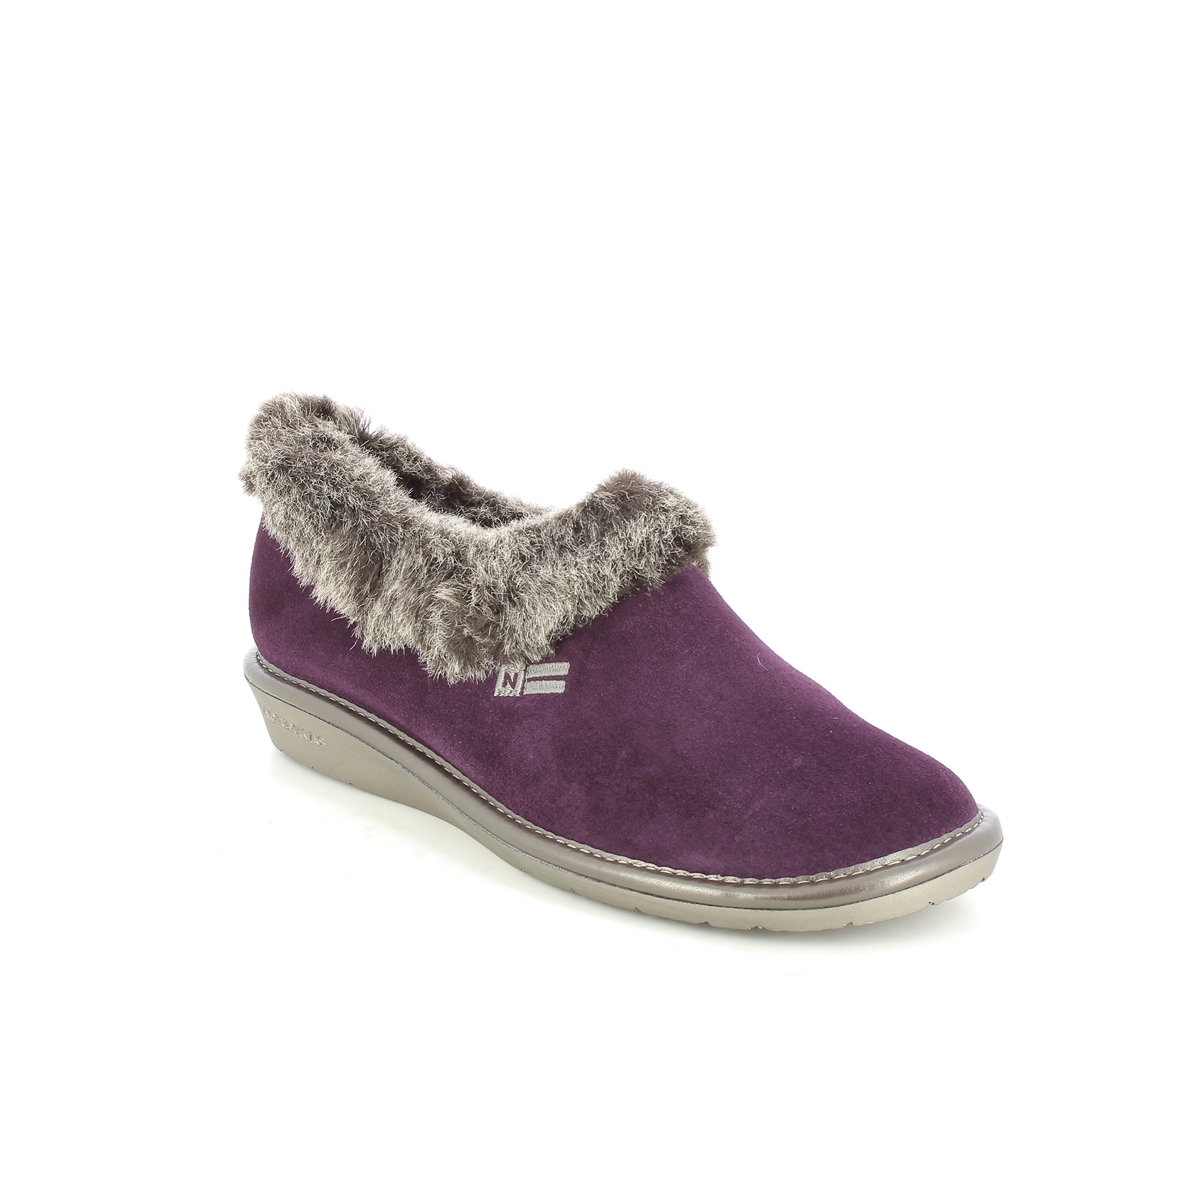 Nordikas Toasty Fur Purple Suede Womens Slippers 1358-95 In Size 38 In Plain Purple Suede